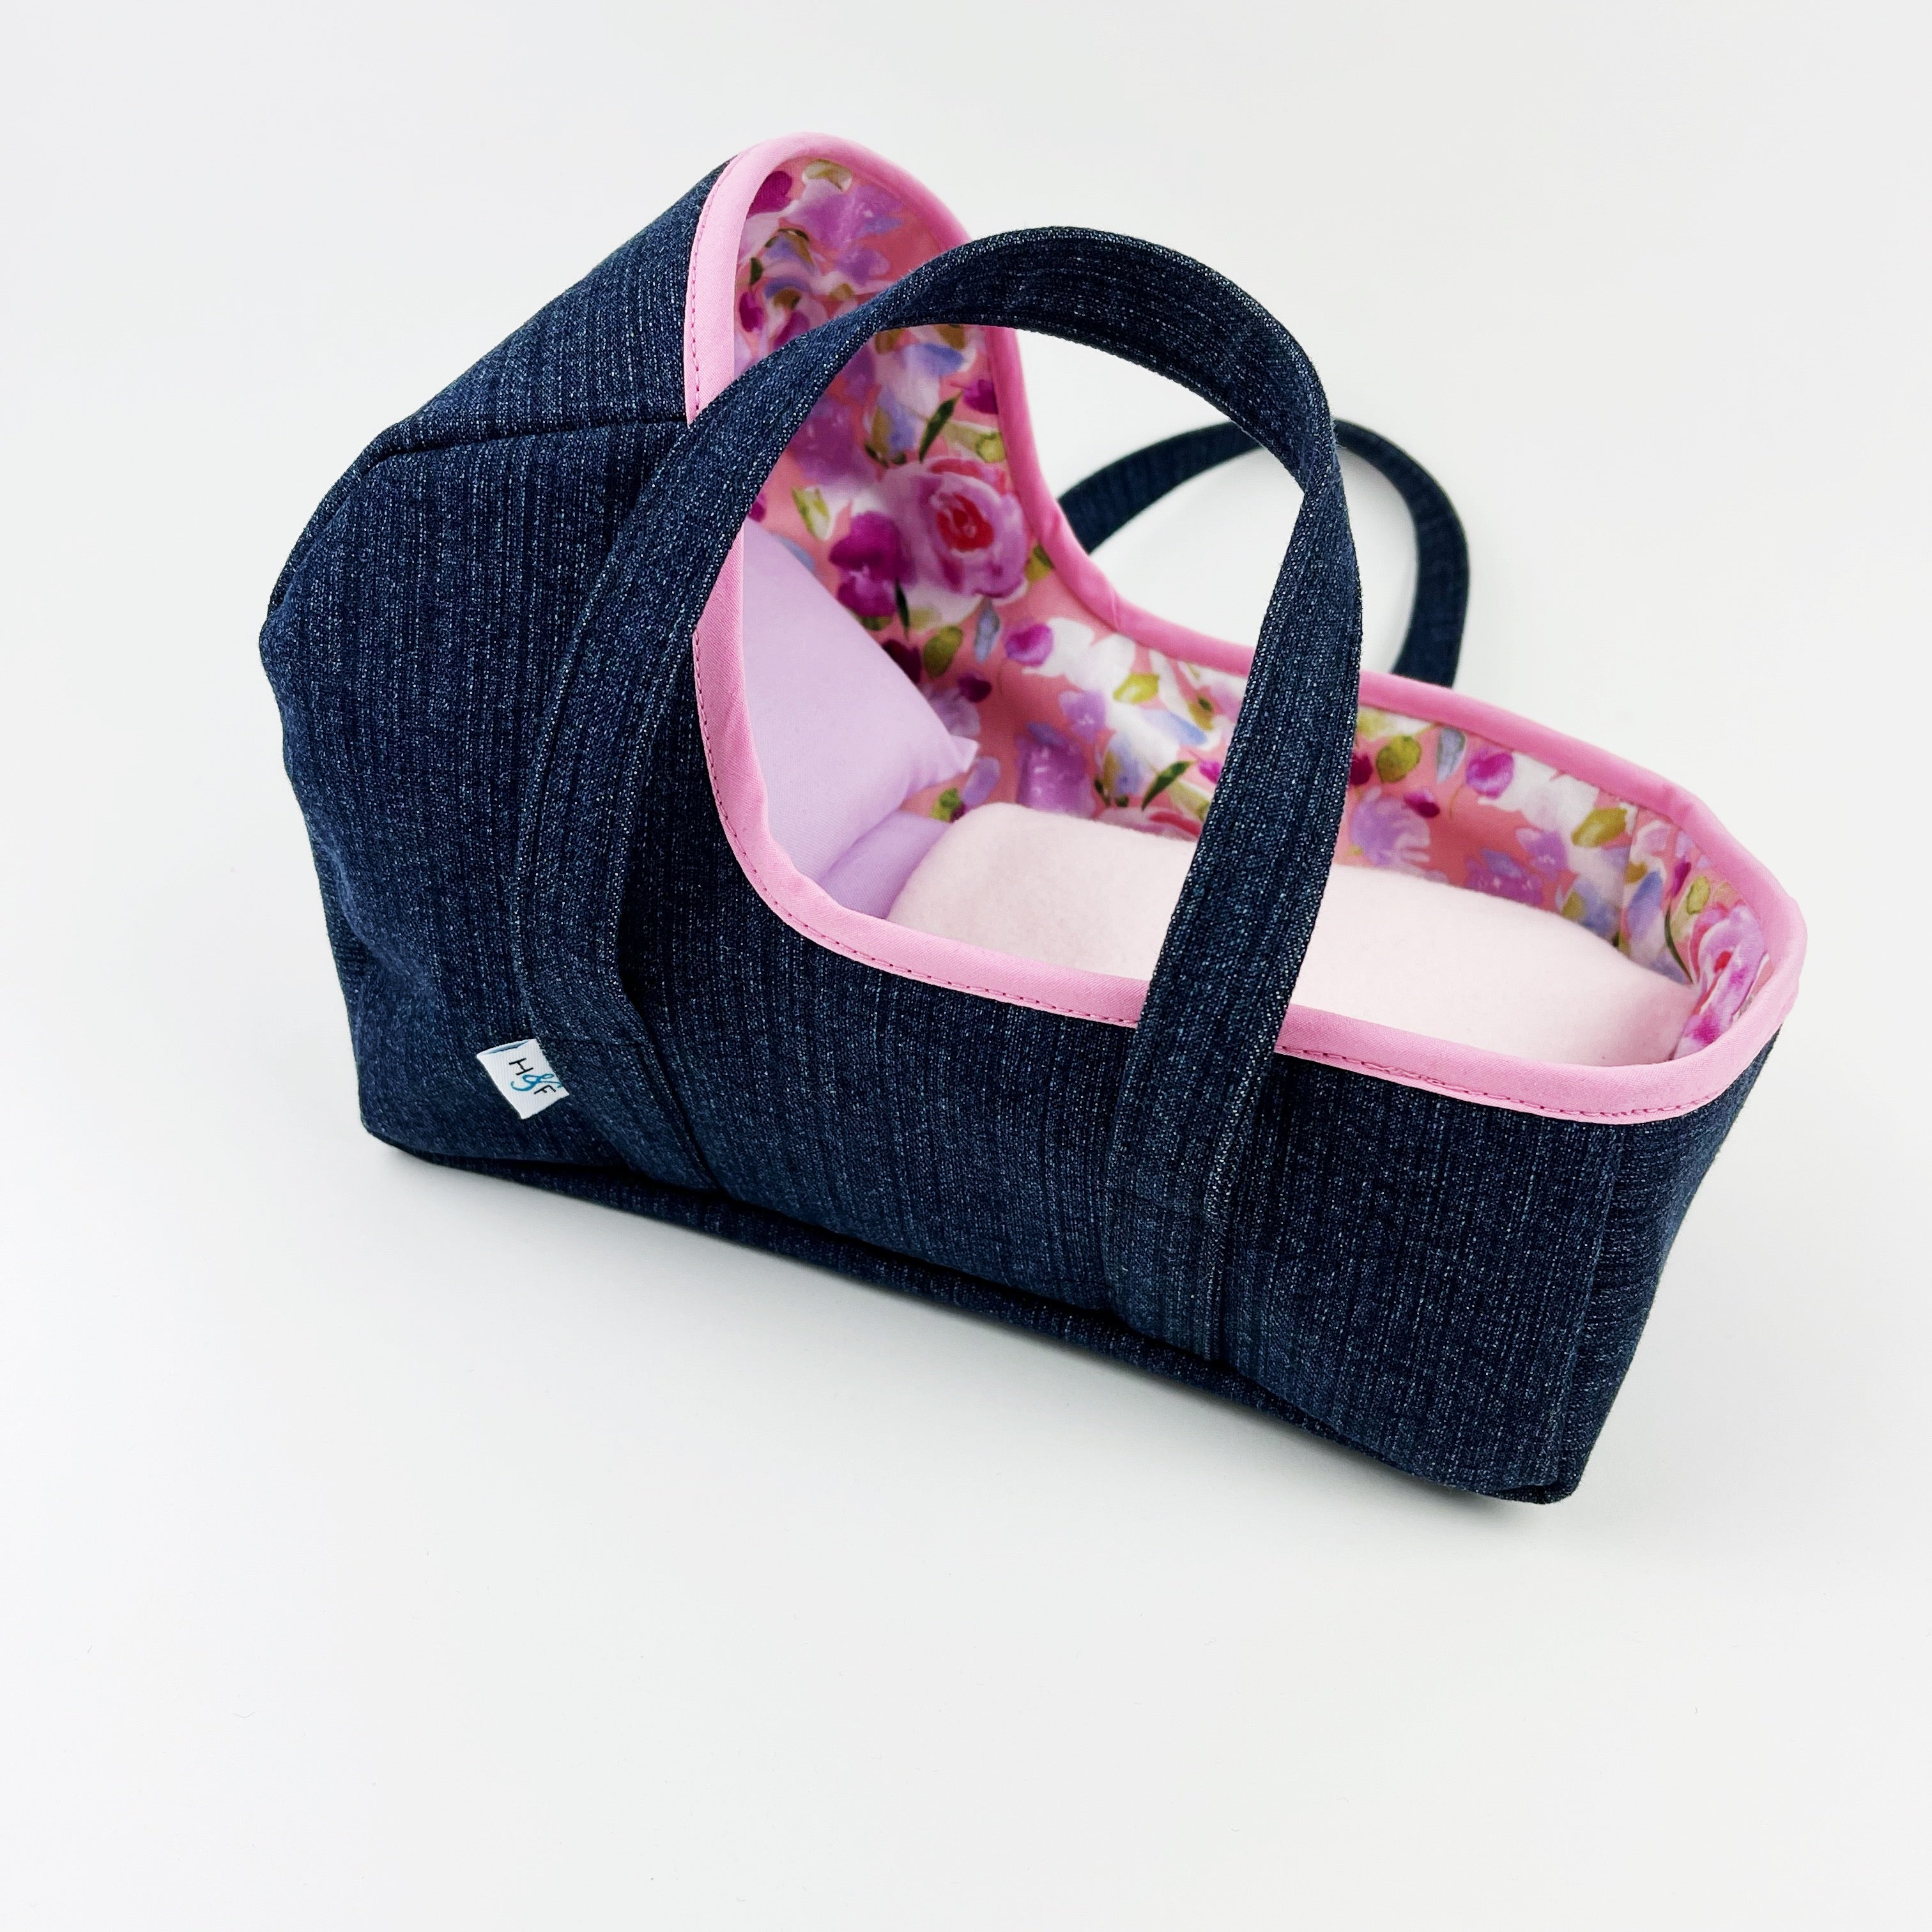 Baby doll bassinet carrier XS - Denim pink floral